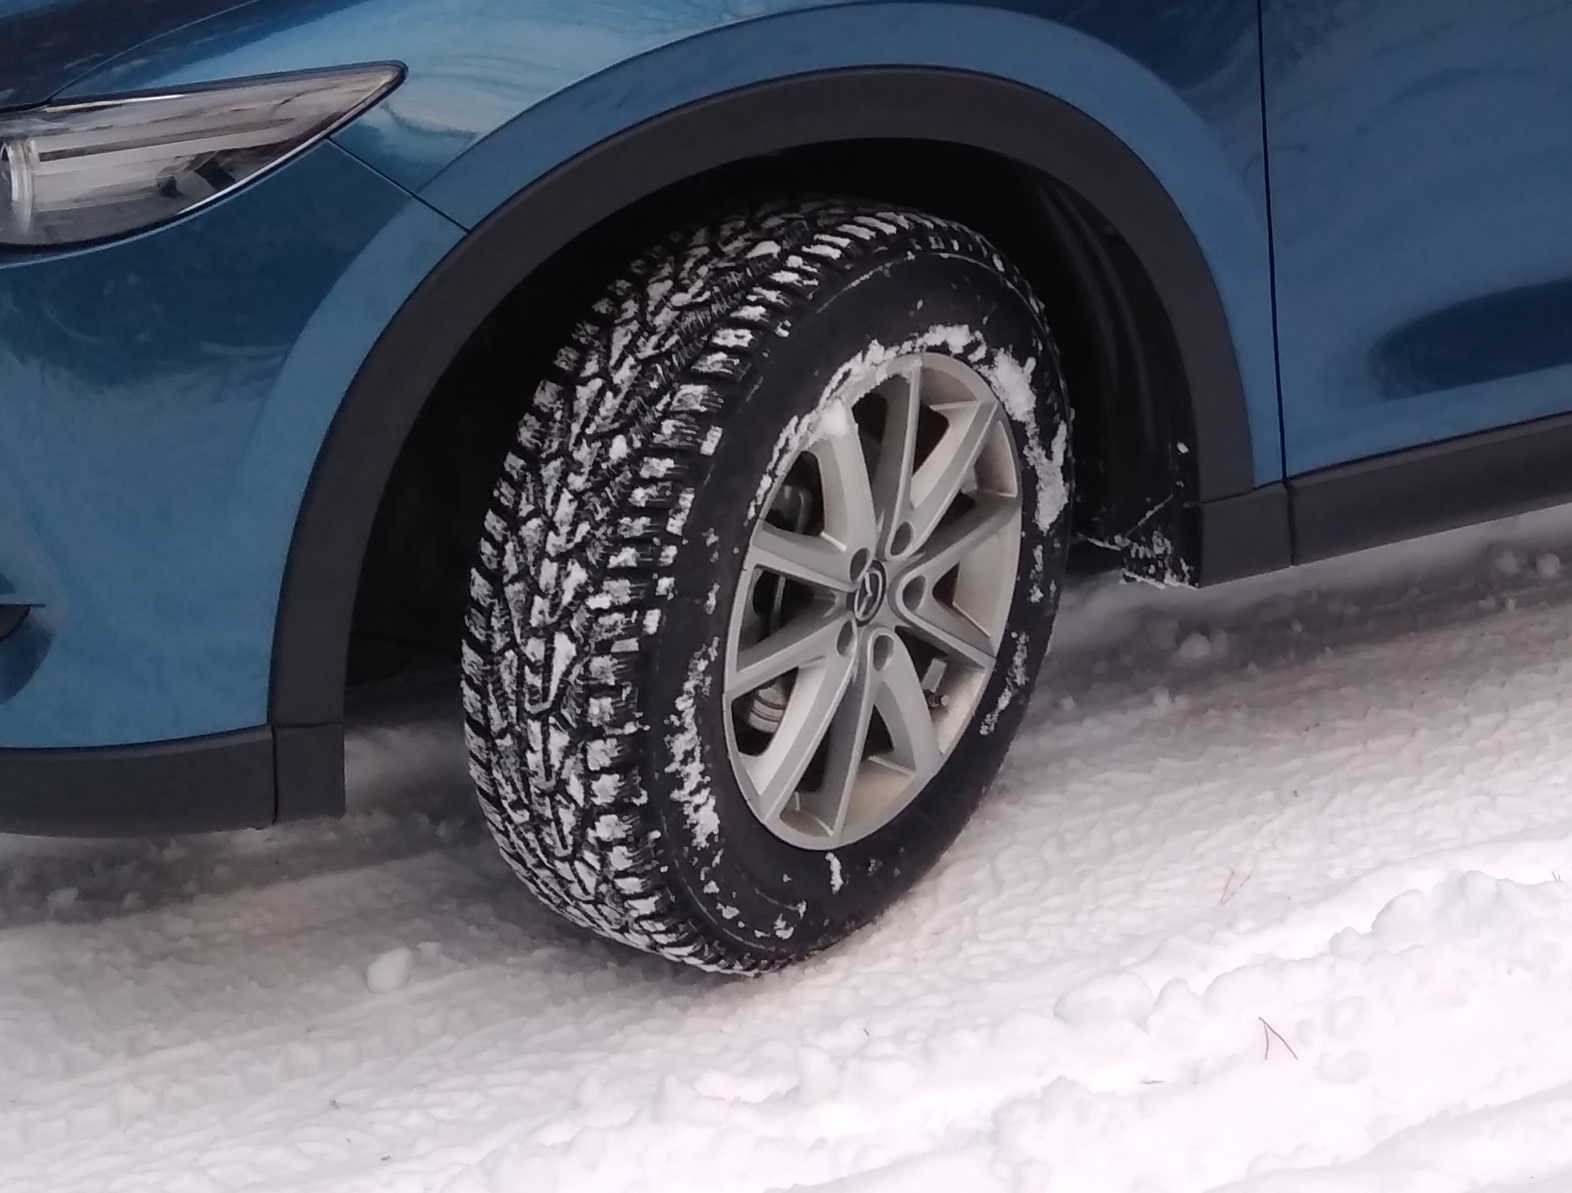 Резина на сх 5. Mazda CX-5 на зимней резине. Mazda CX 5 зимние колеса. Зимняя резина Мазда сх5. Резина зимняя на Мазда сх5 225 60.